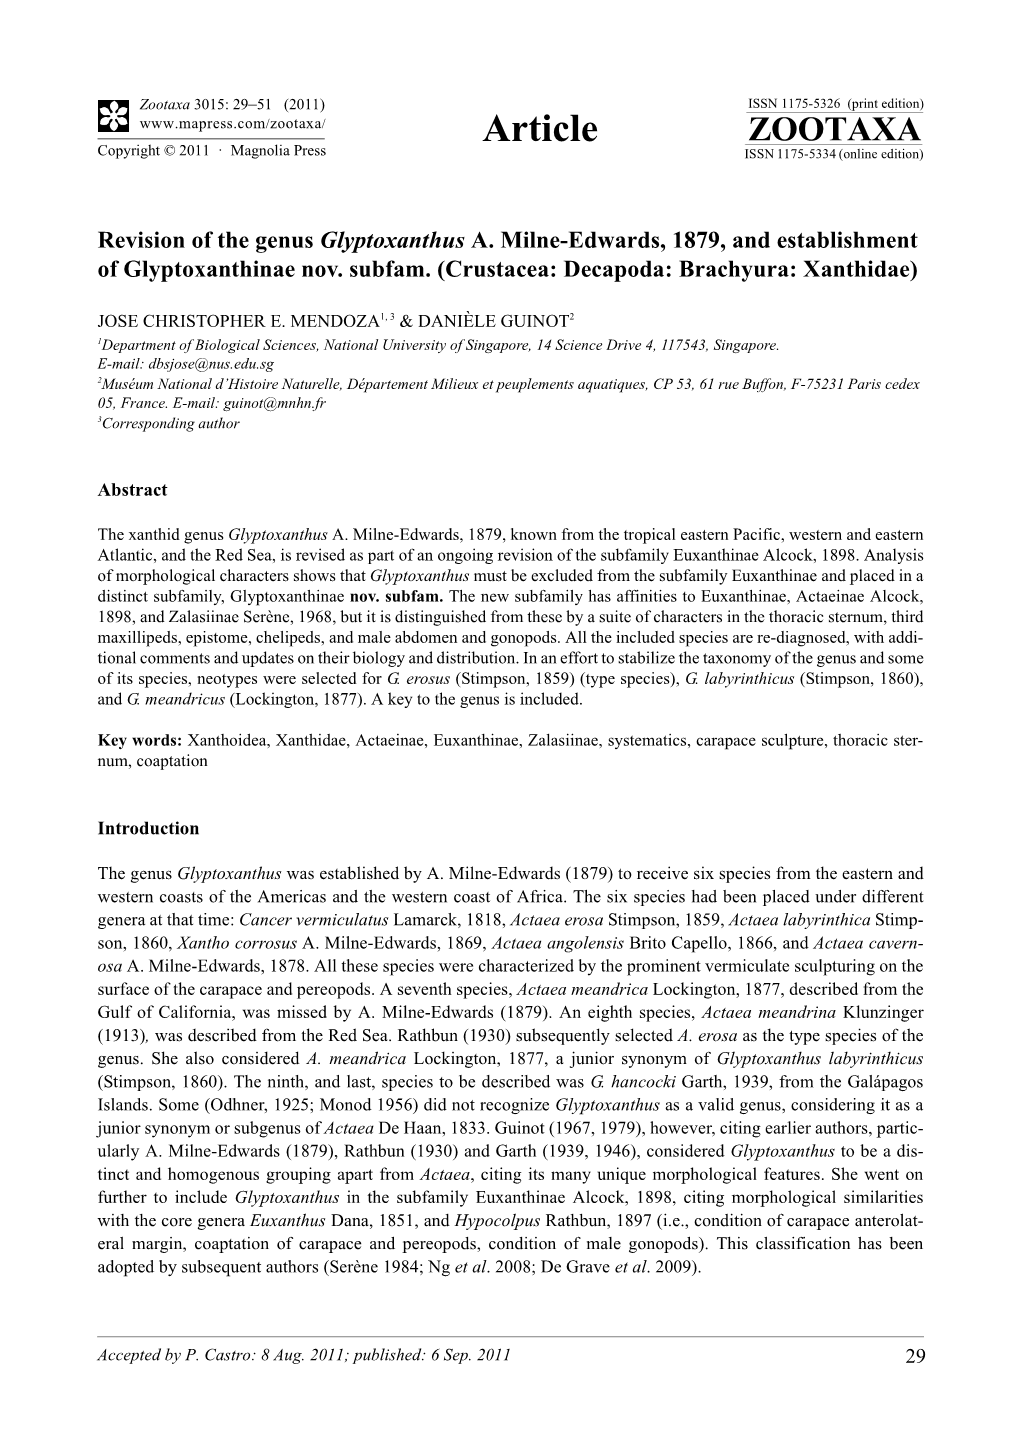 Revision of the Genus Glyptoxanthus A. Milne-Edwards, 1879, and Establishment of Glyptoxanthinae Nov